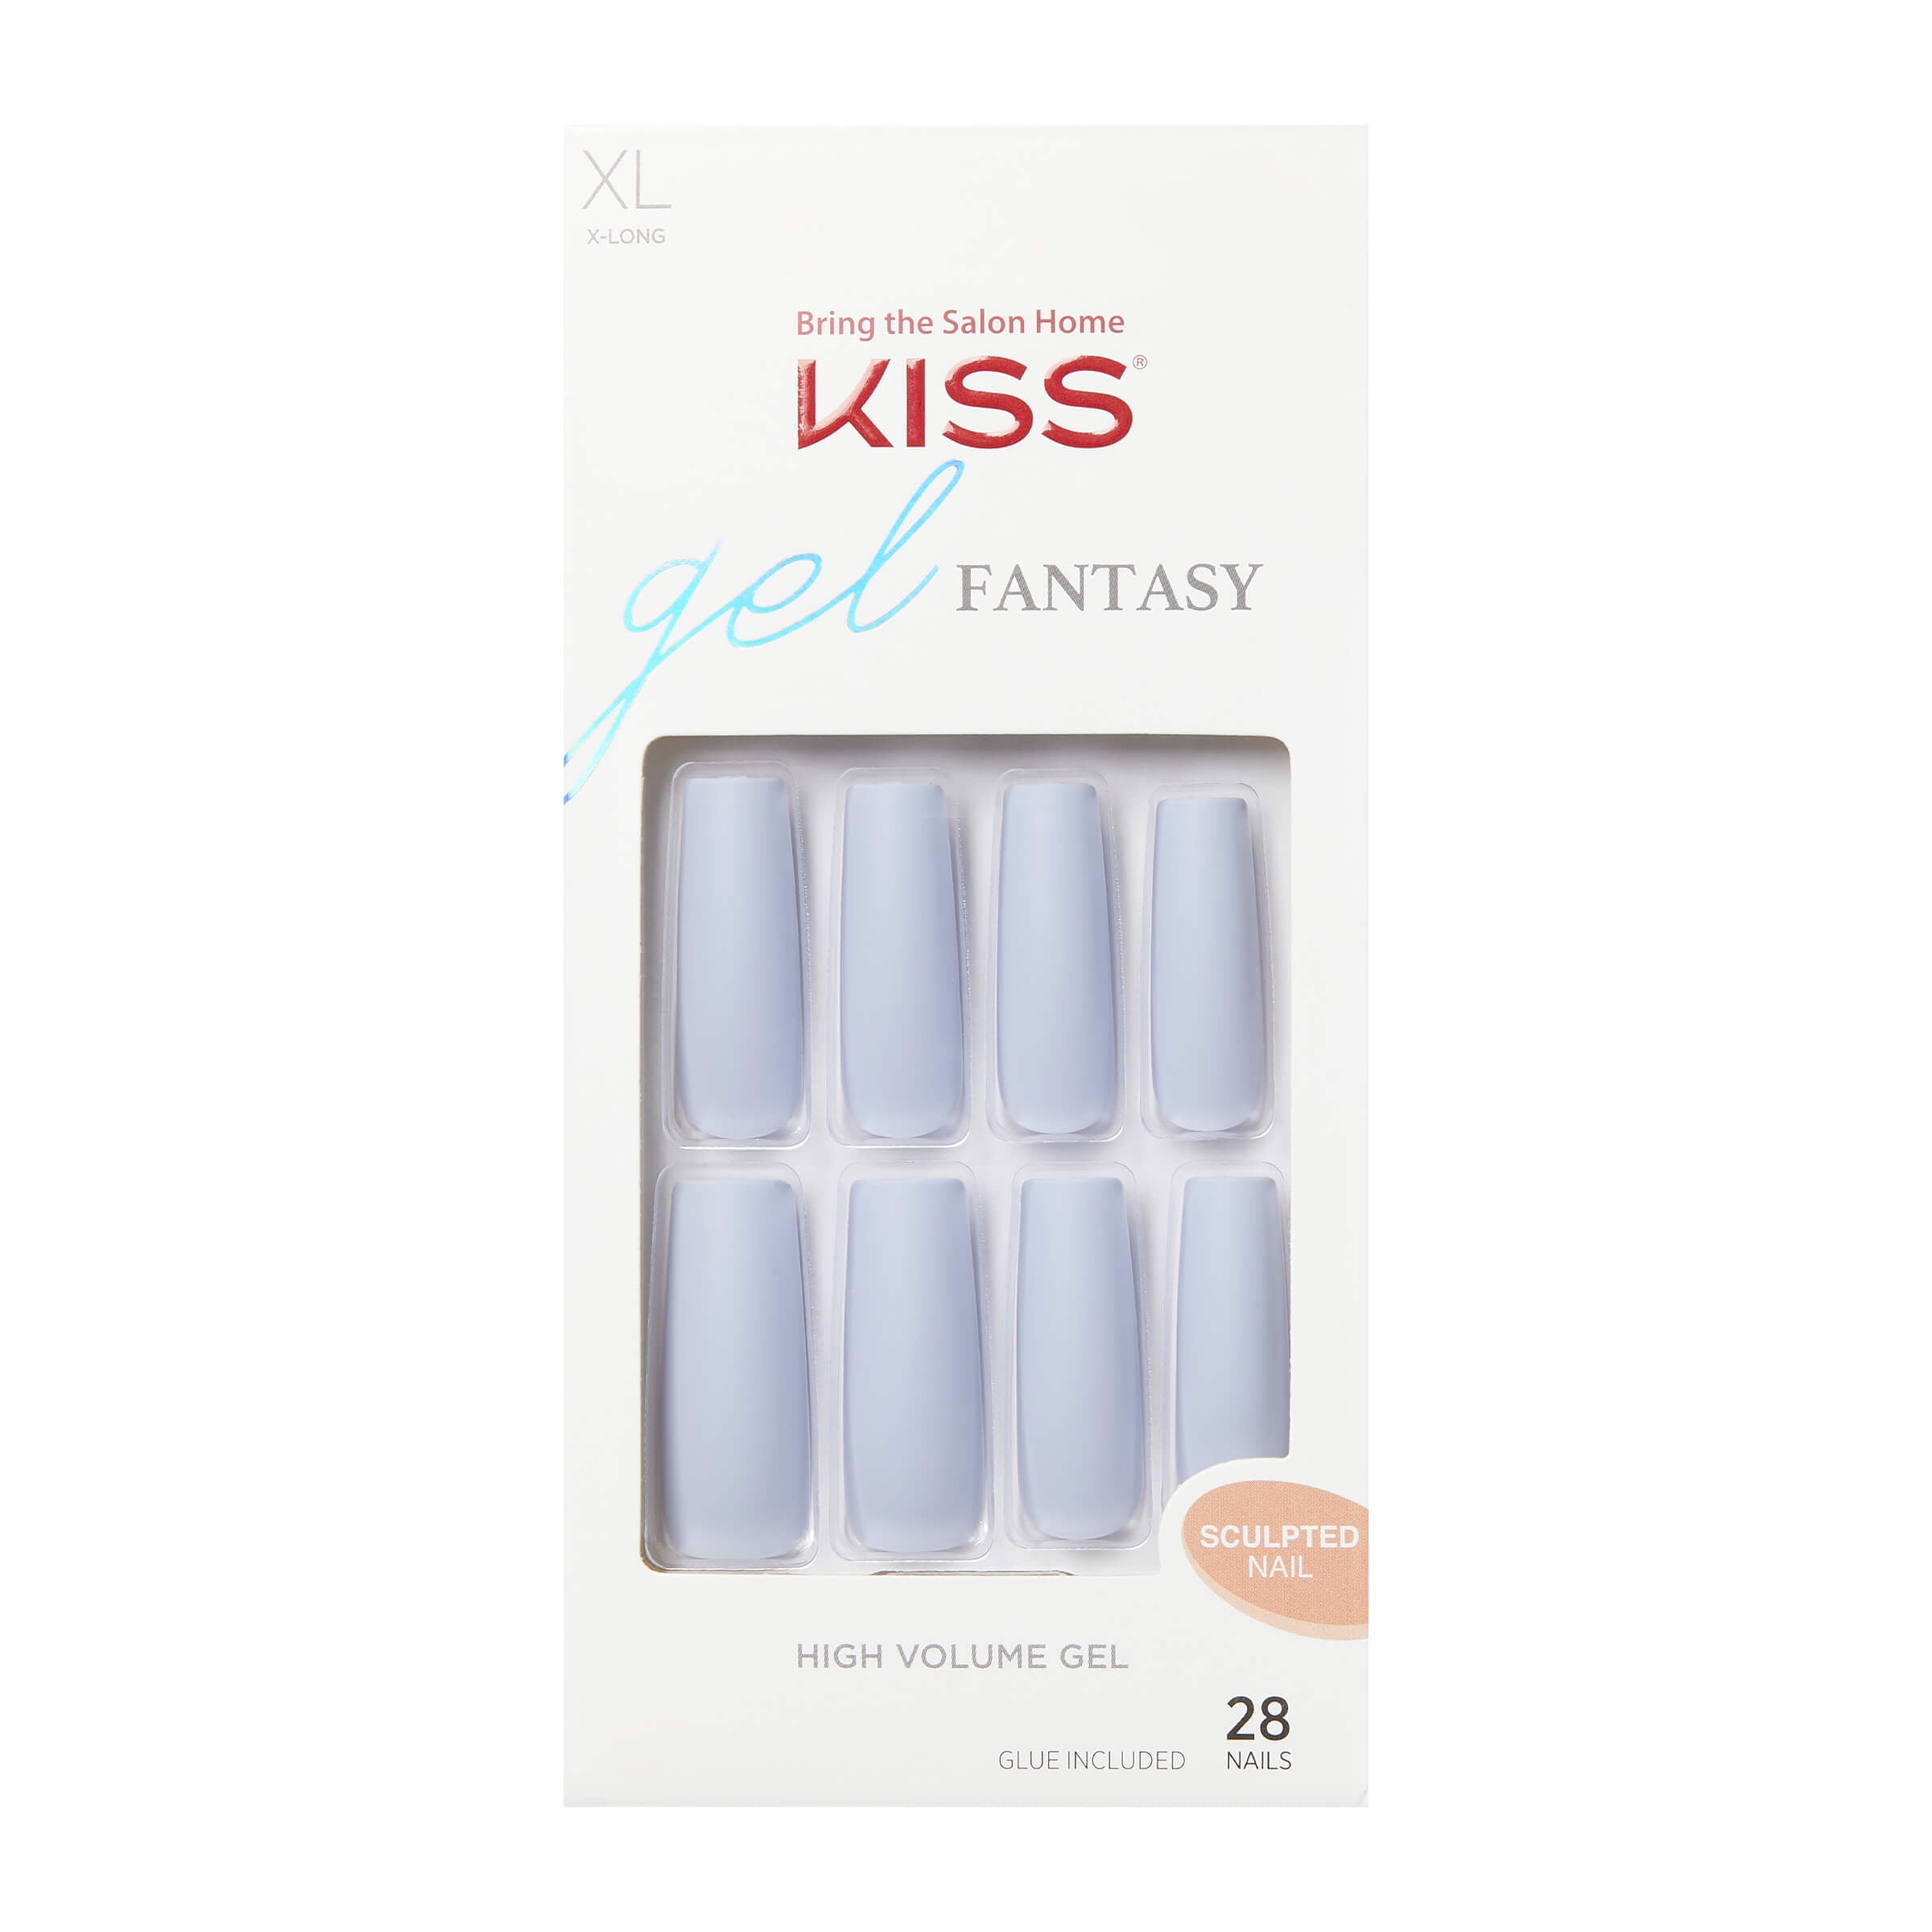 KISS - Voguish Fantasy Fake Nails, Long Coffin, Afterglow, 28 Count -  Walmart.com